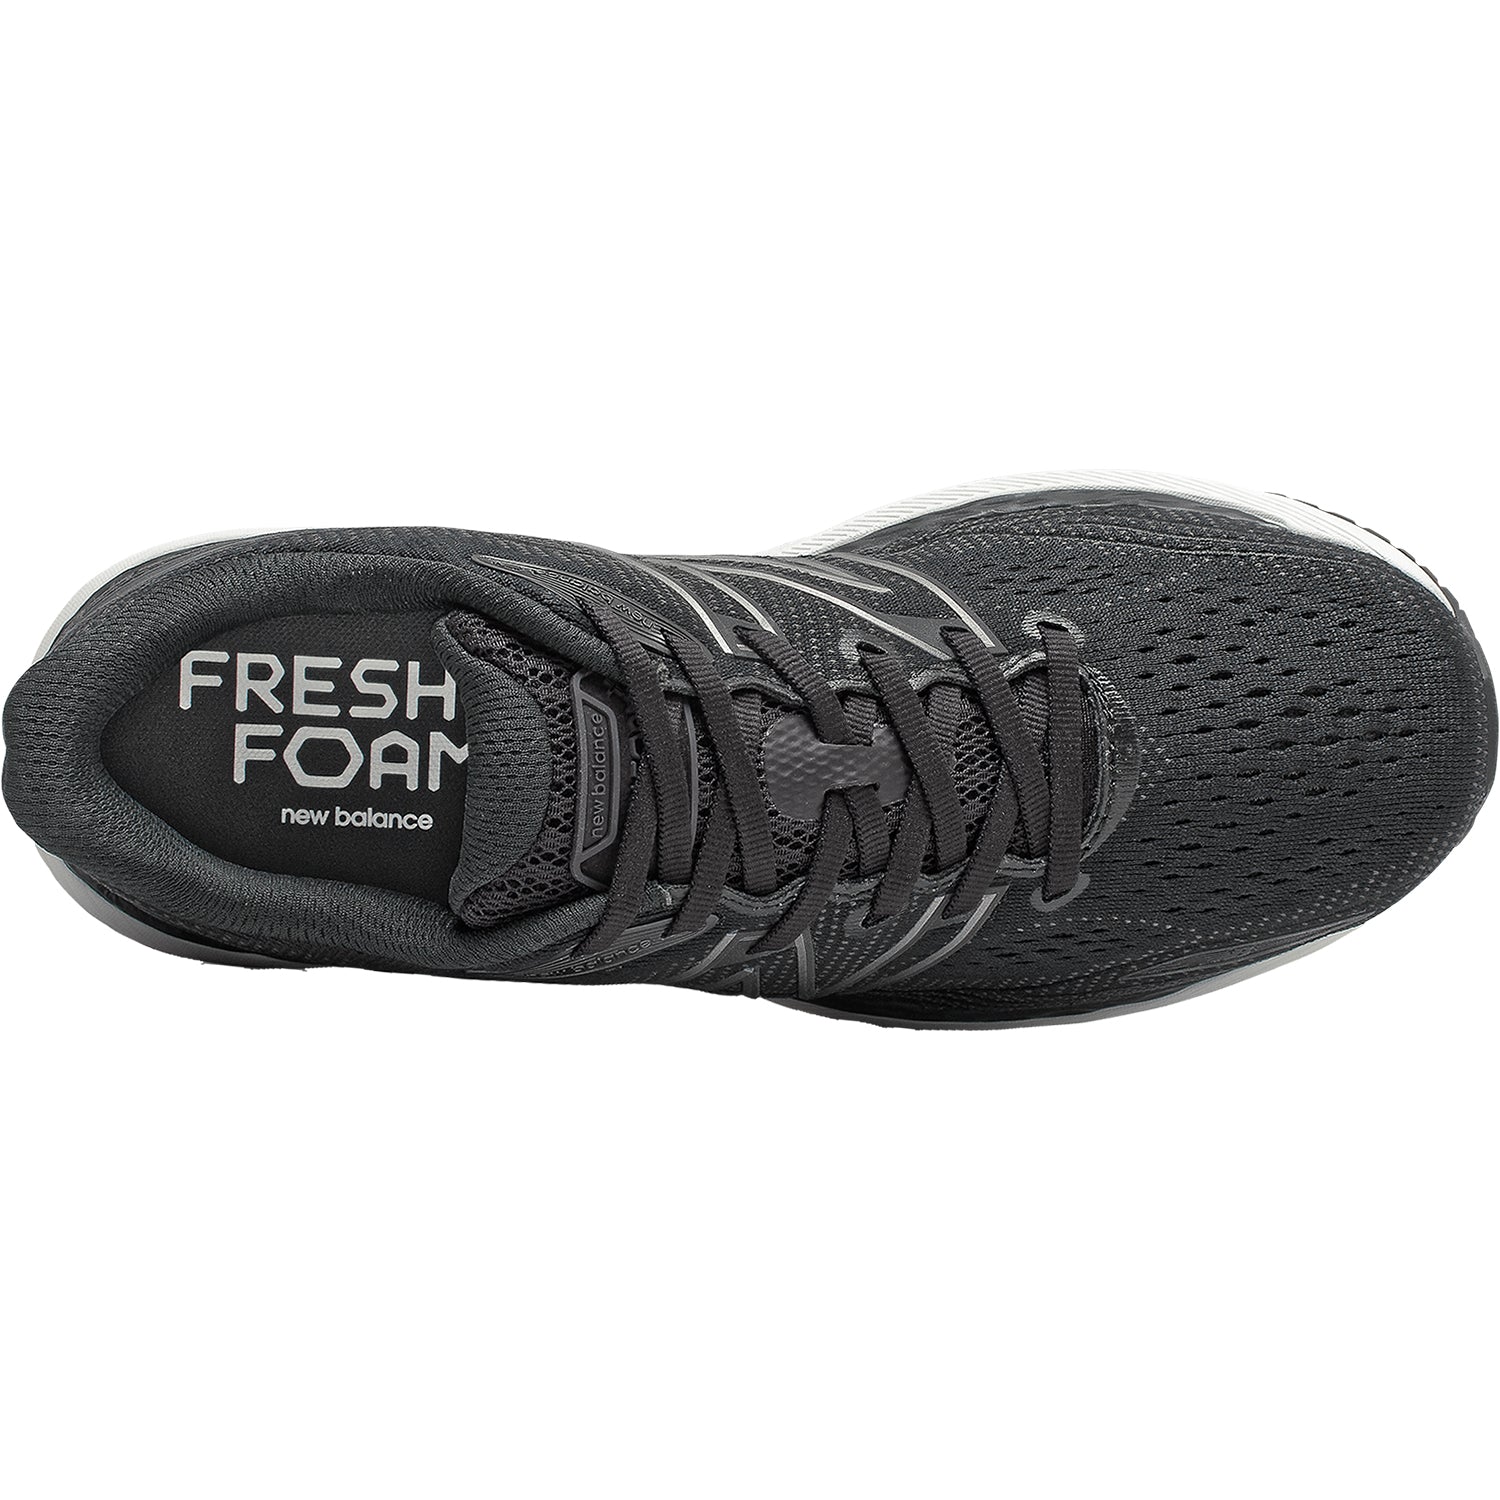 New Balance Fresh Foam M860v12 | Men's Running Shoes | Footwear etc.